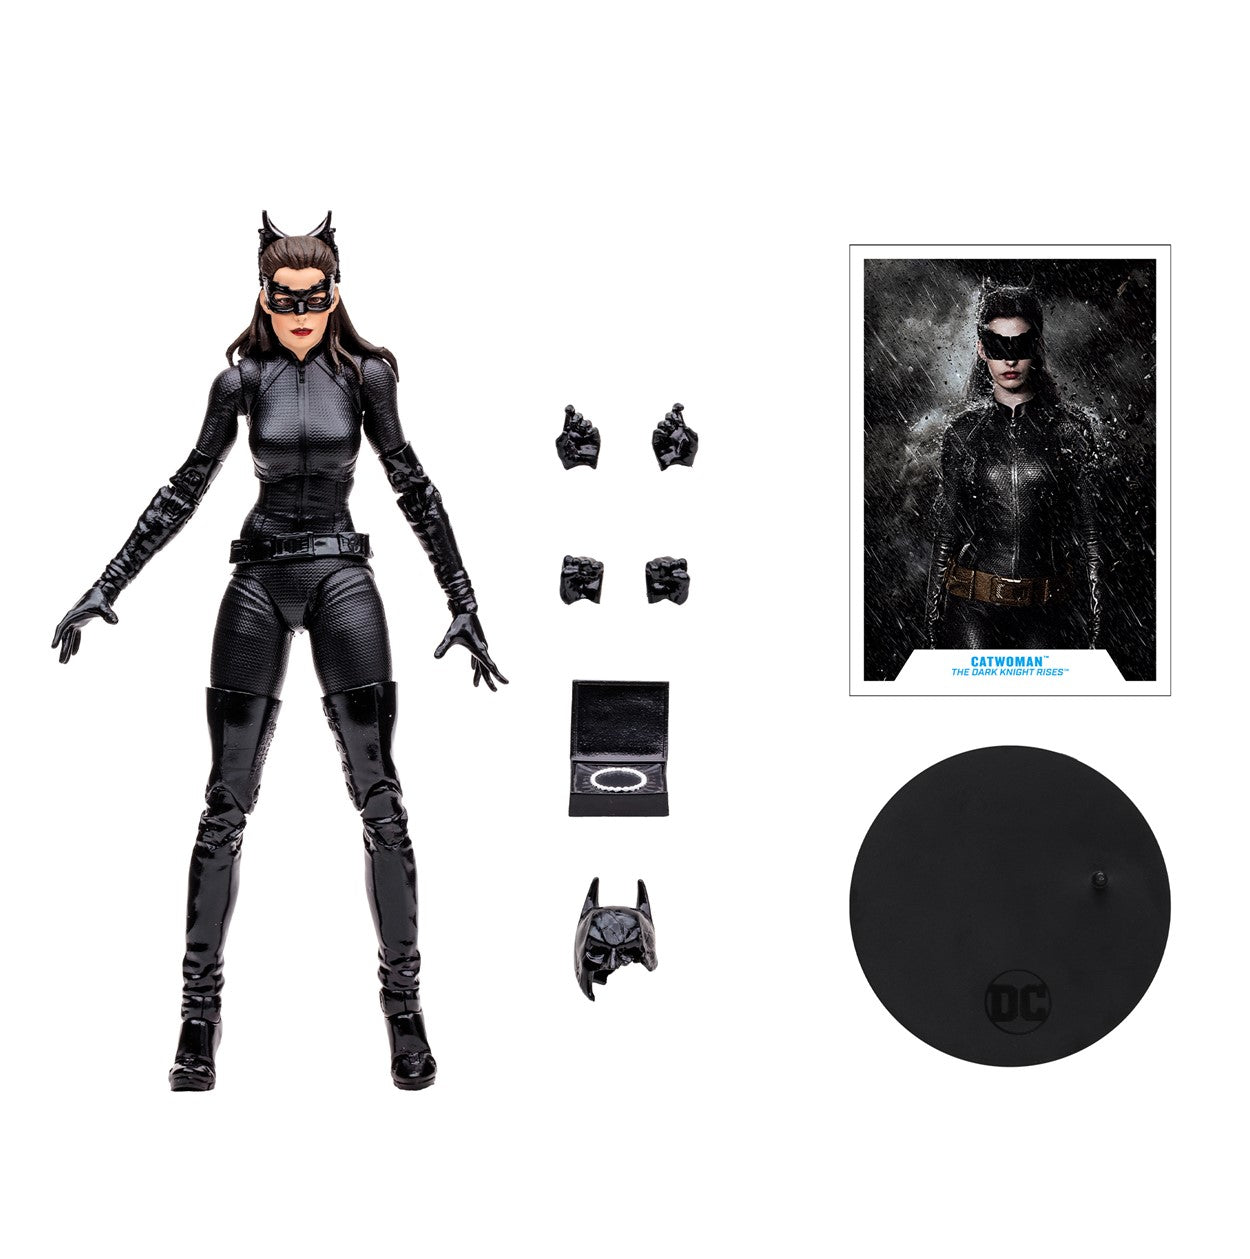 DC Multiverse Catwoman (The Dark Knight Rises) [Platinum Edition]